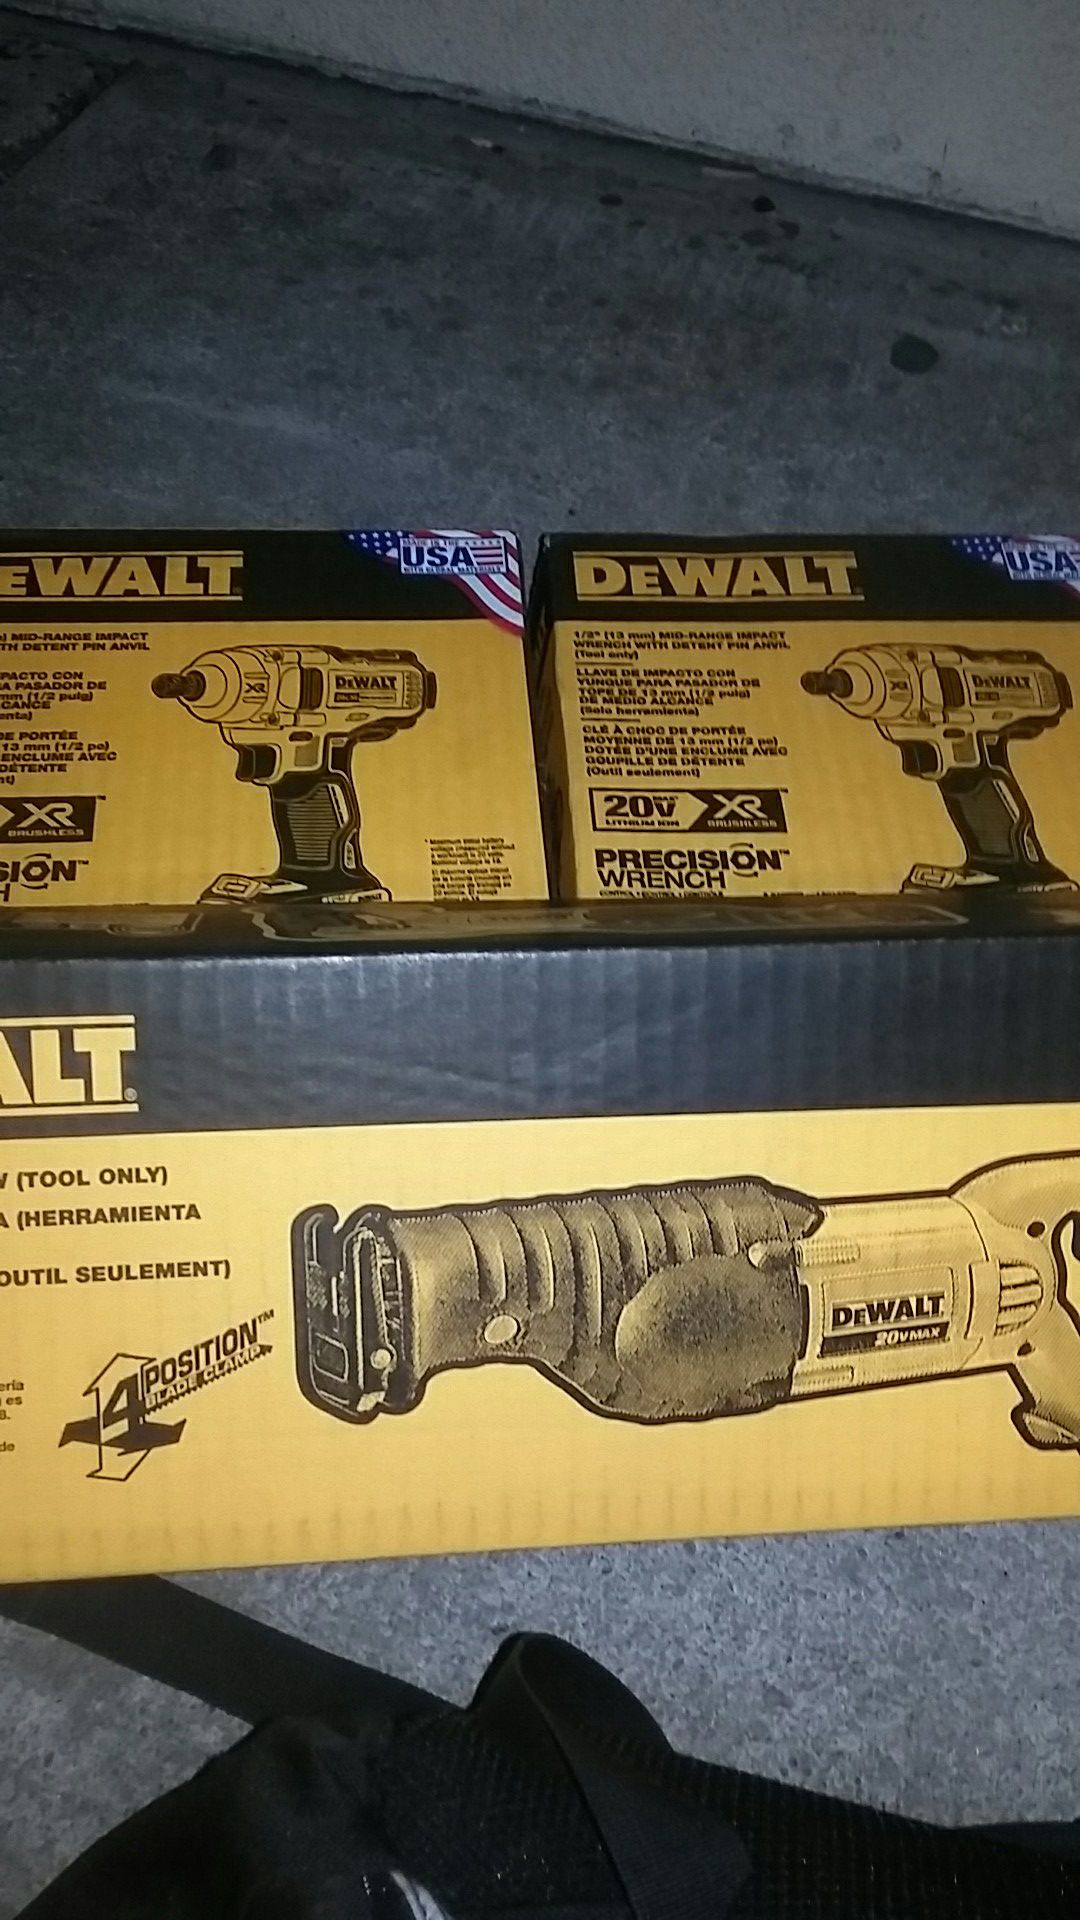 2 20v Dewalt brushless xr 1/2 impact wrench with dent pin anvil and a 20v Dewalt reciprocating saw